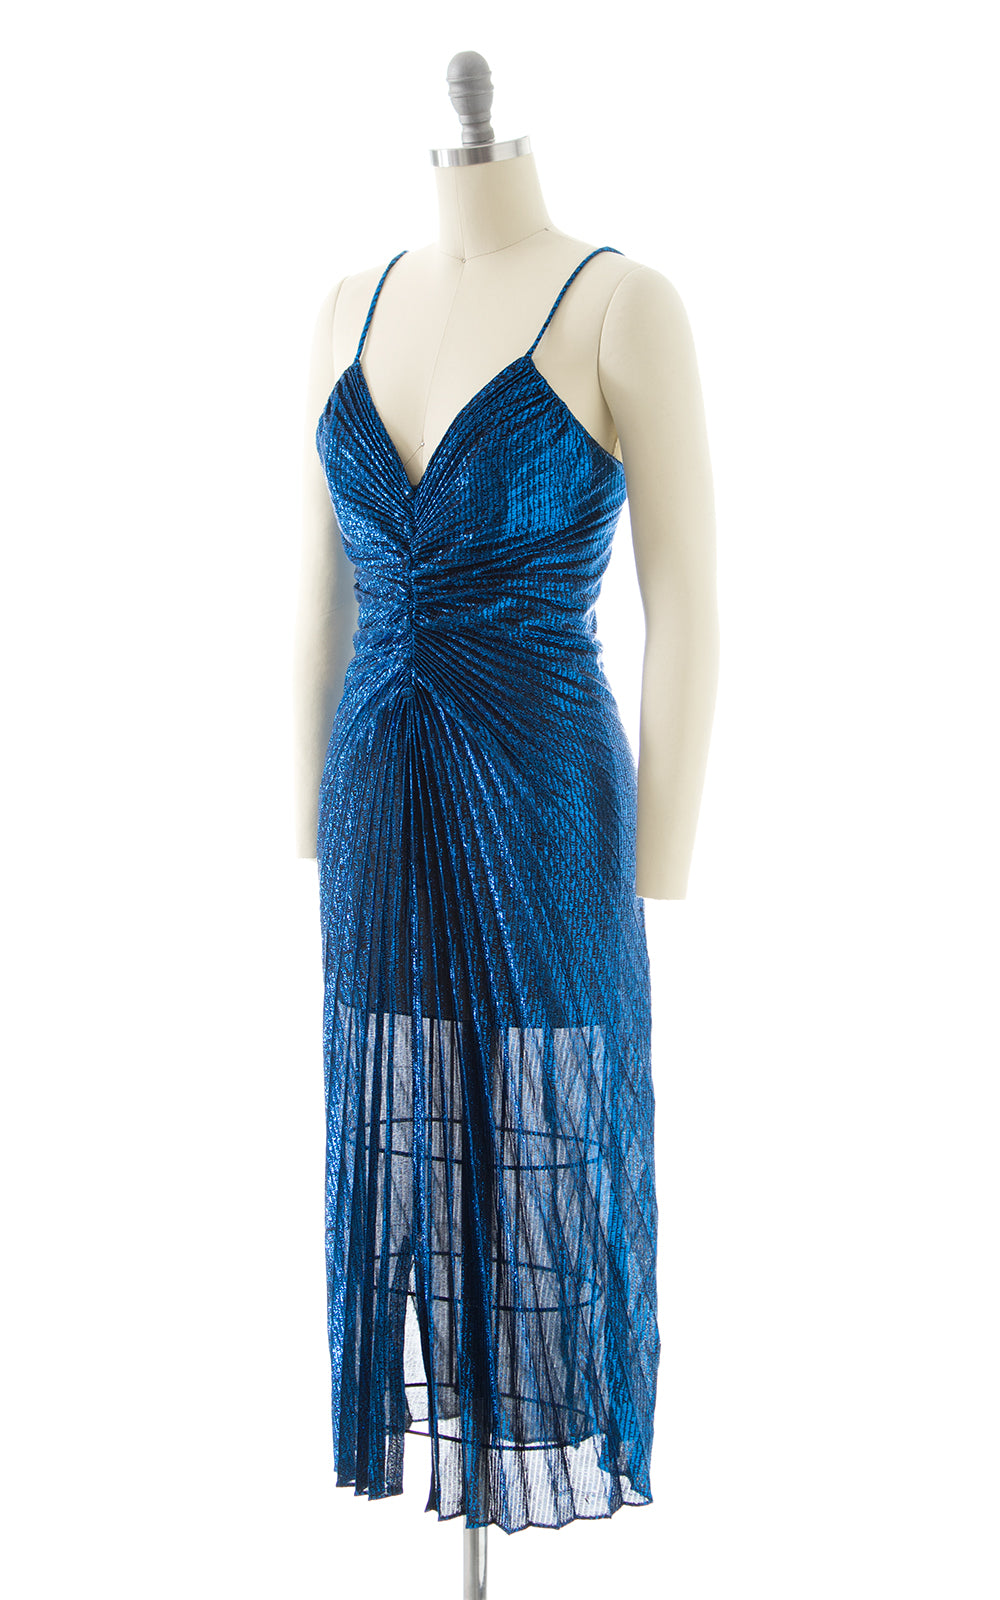 1980s Travilla Style Metallic Blue Party Dress BirthdayLifeVintage